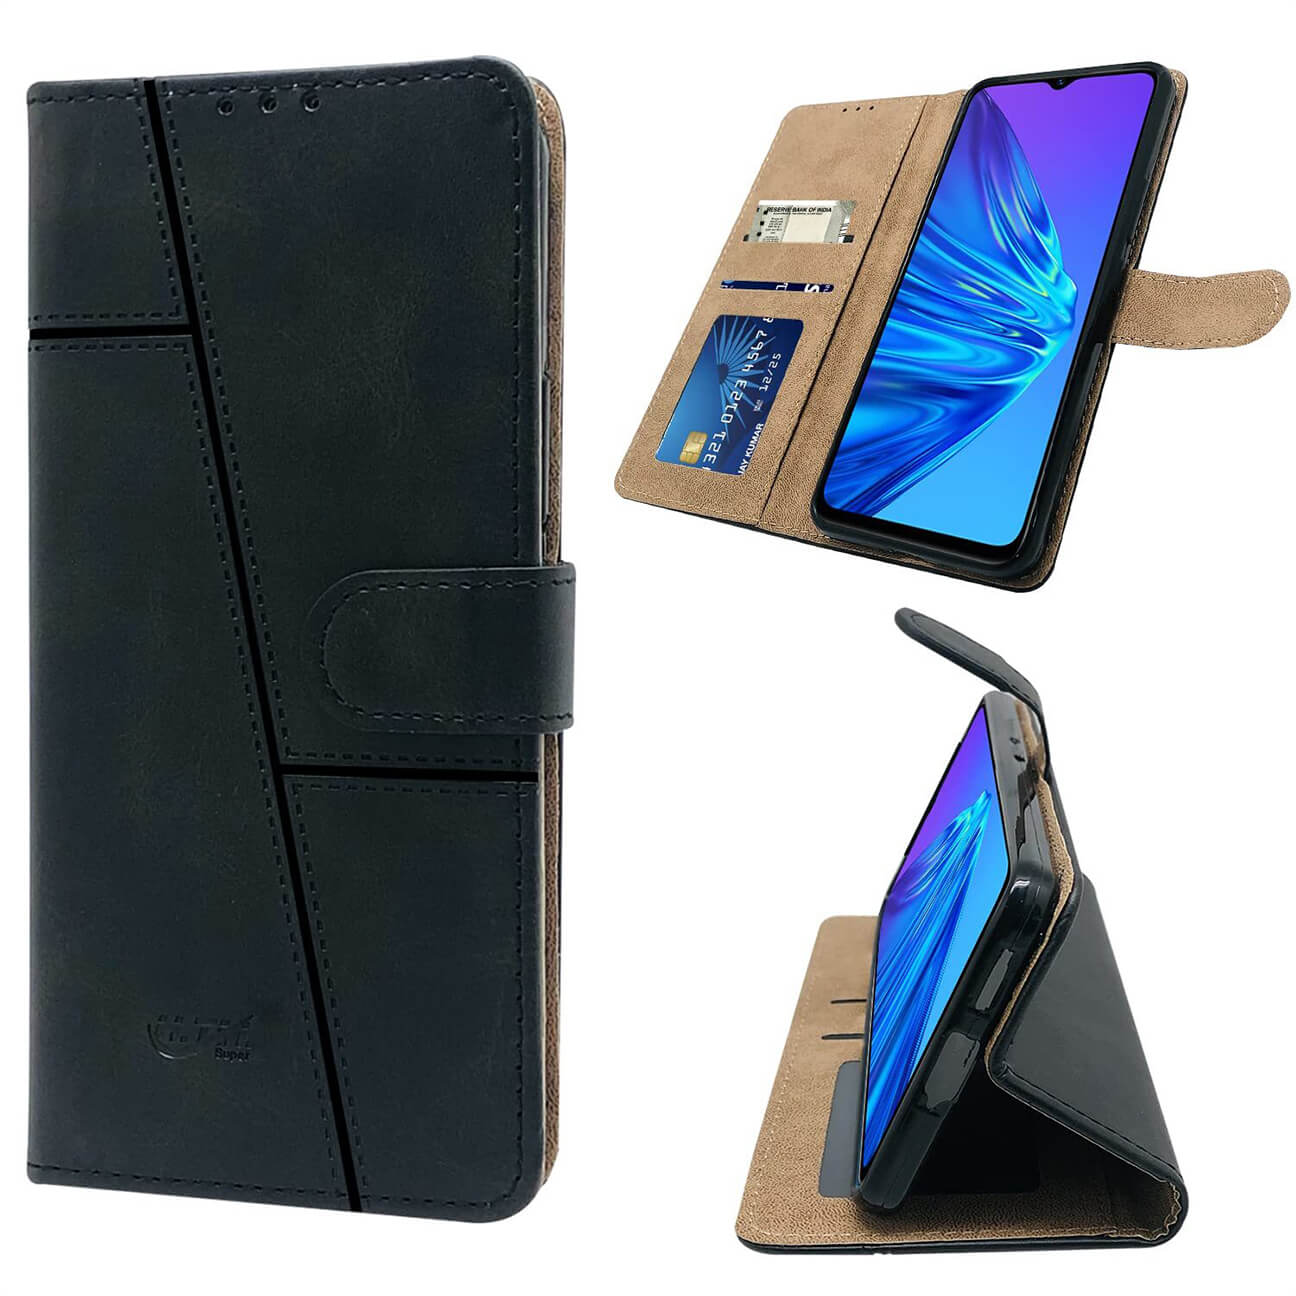 Samsung Galaxy A2 Core (2019) Flip Cover Image